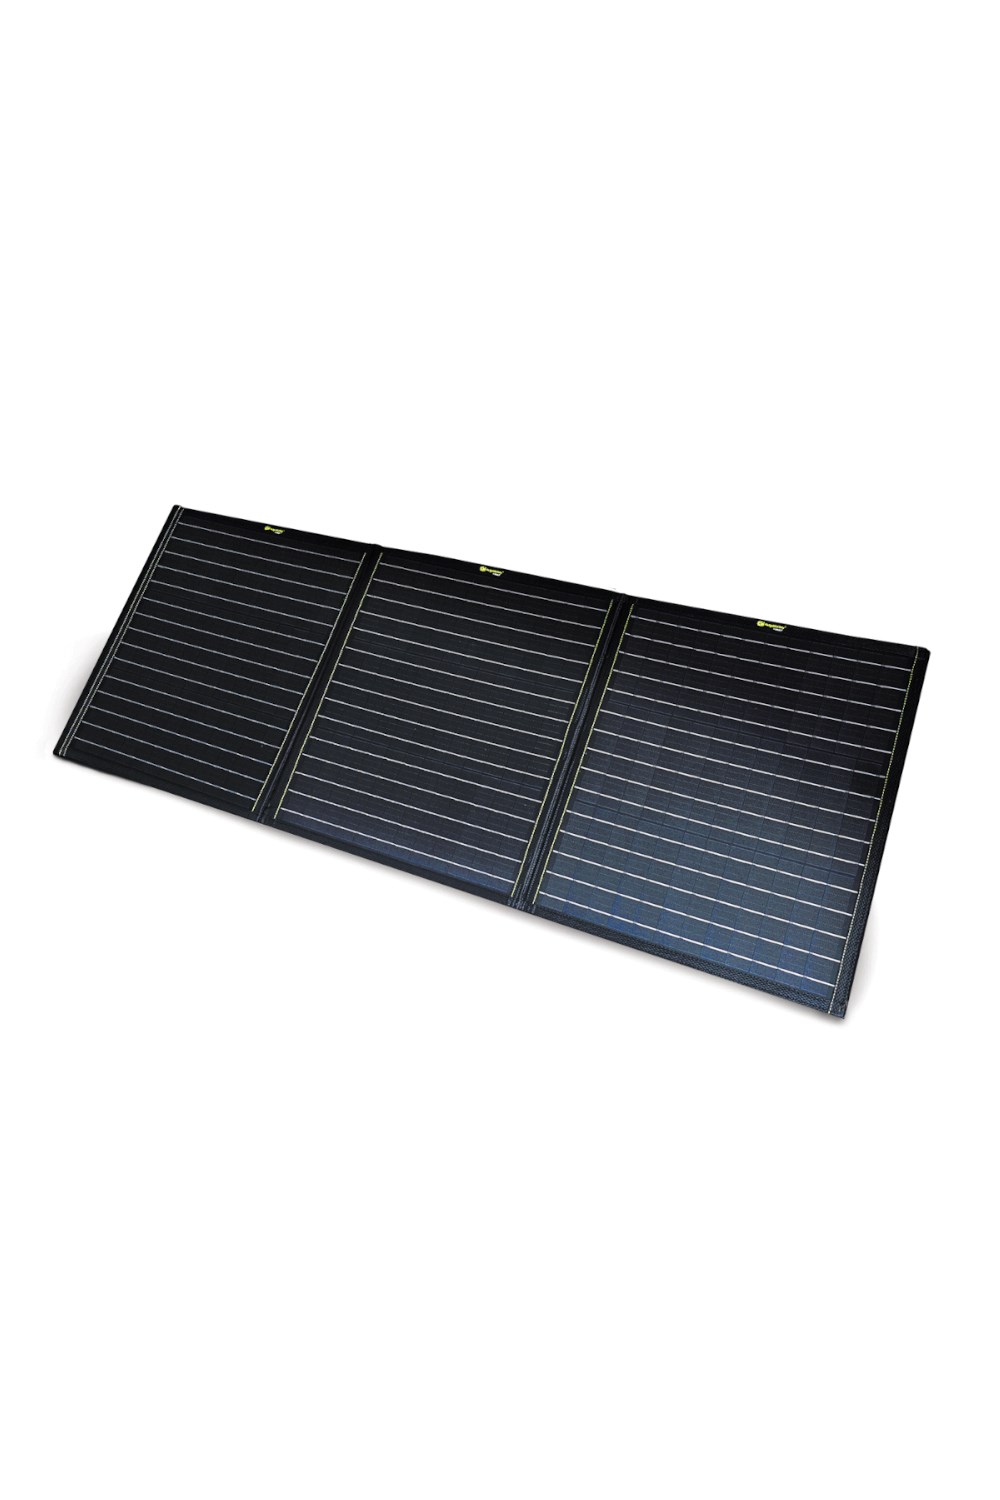 Vault C-smart Pd 120w Solar Panel -